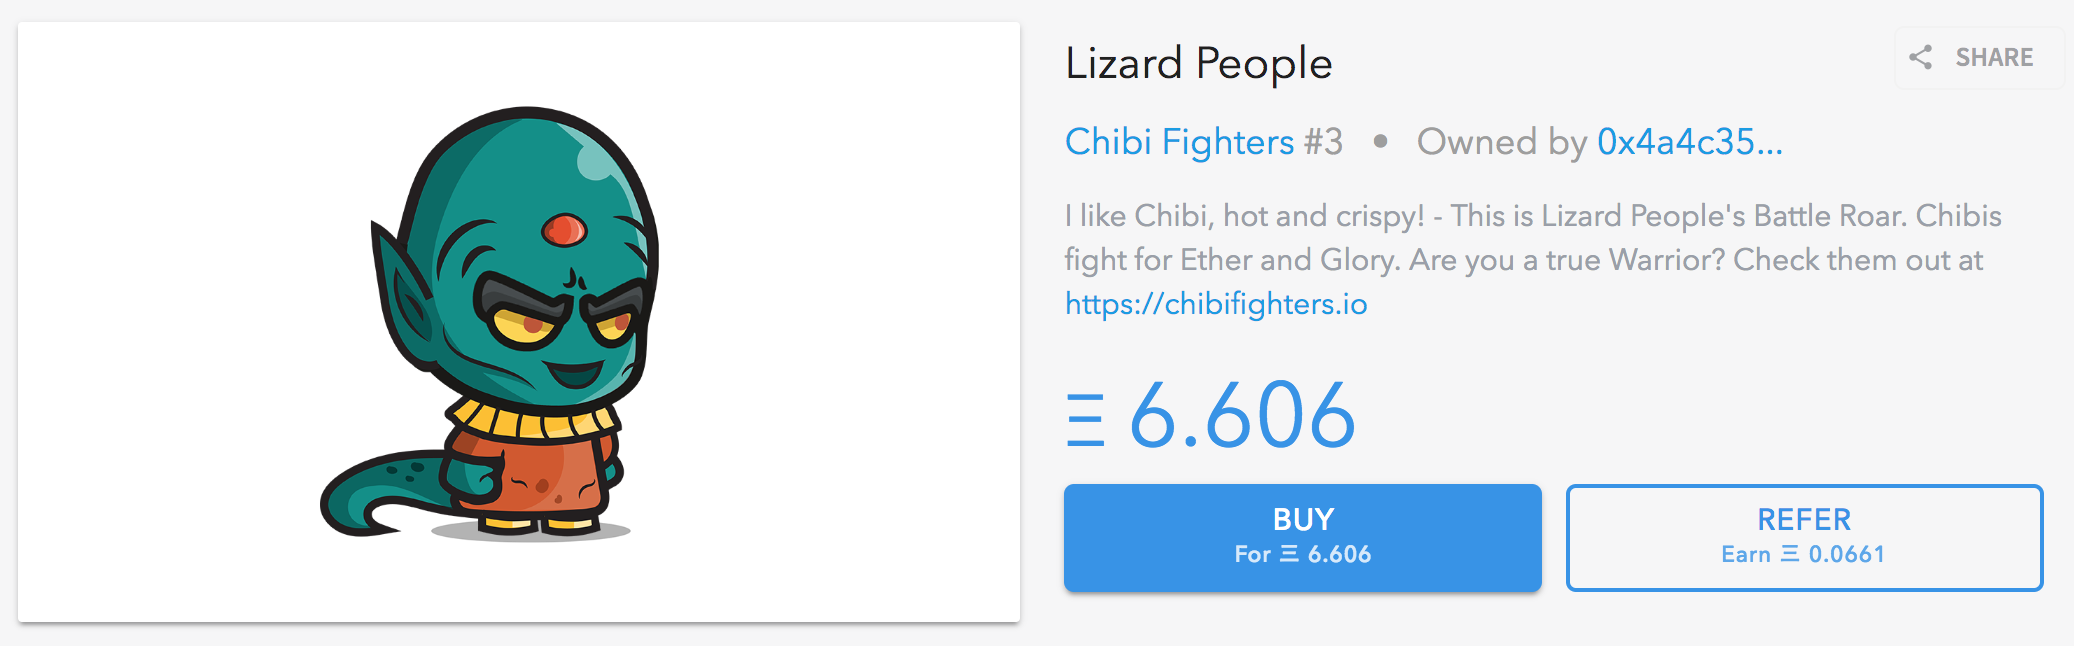 chibi fighters lizard people